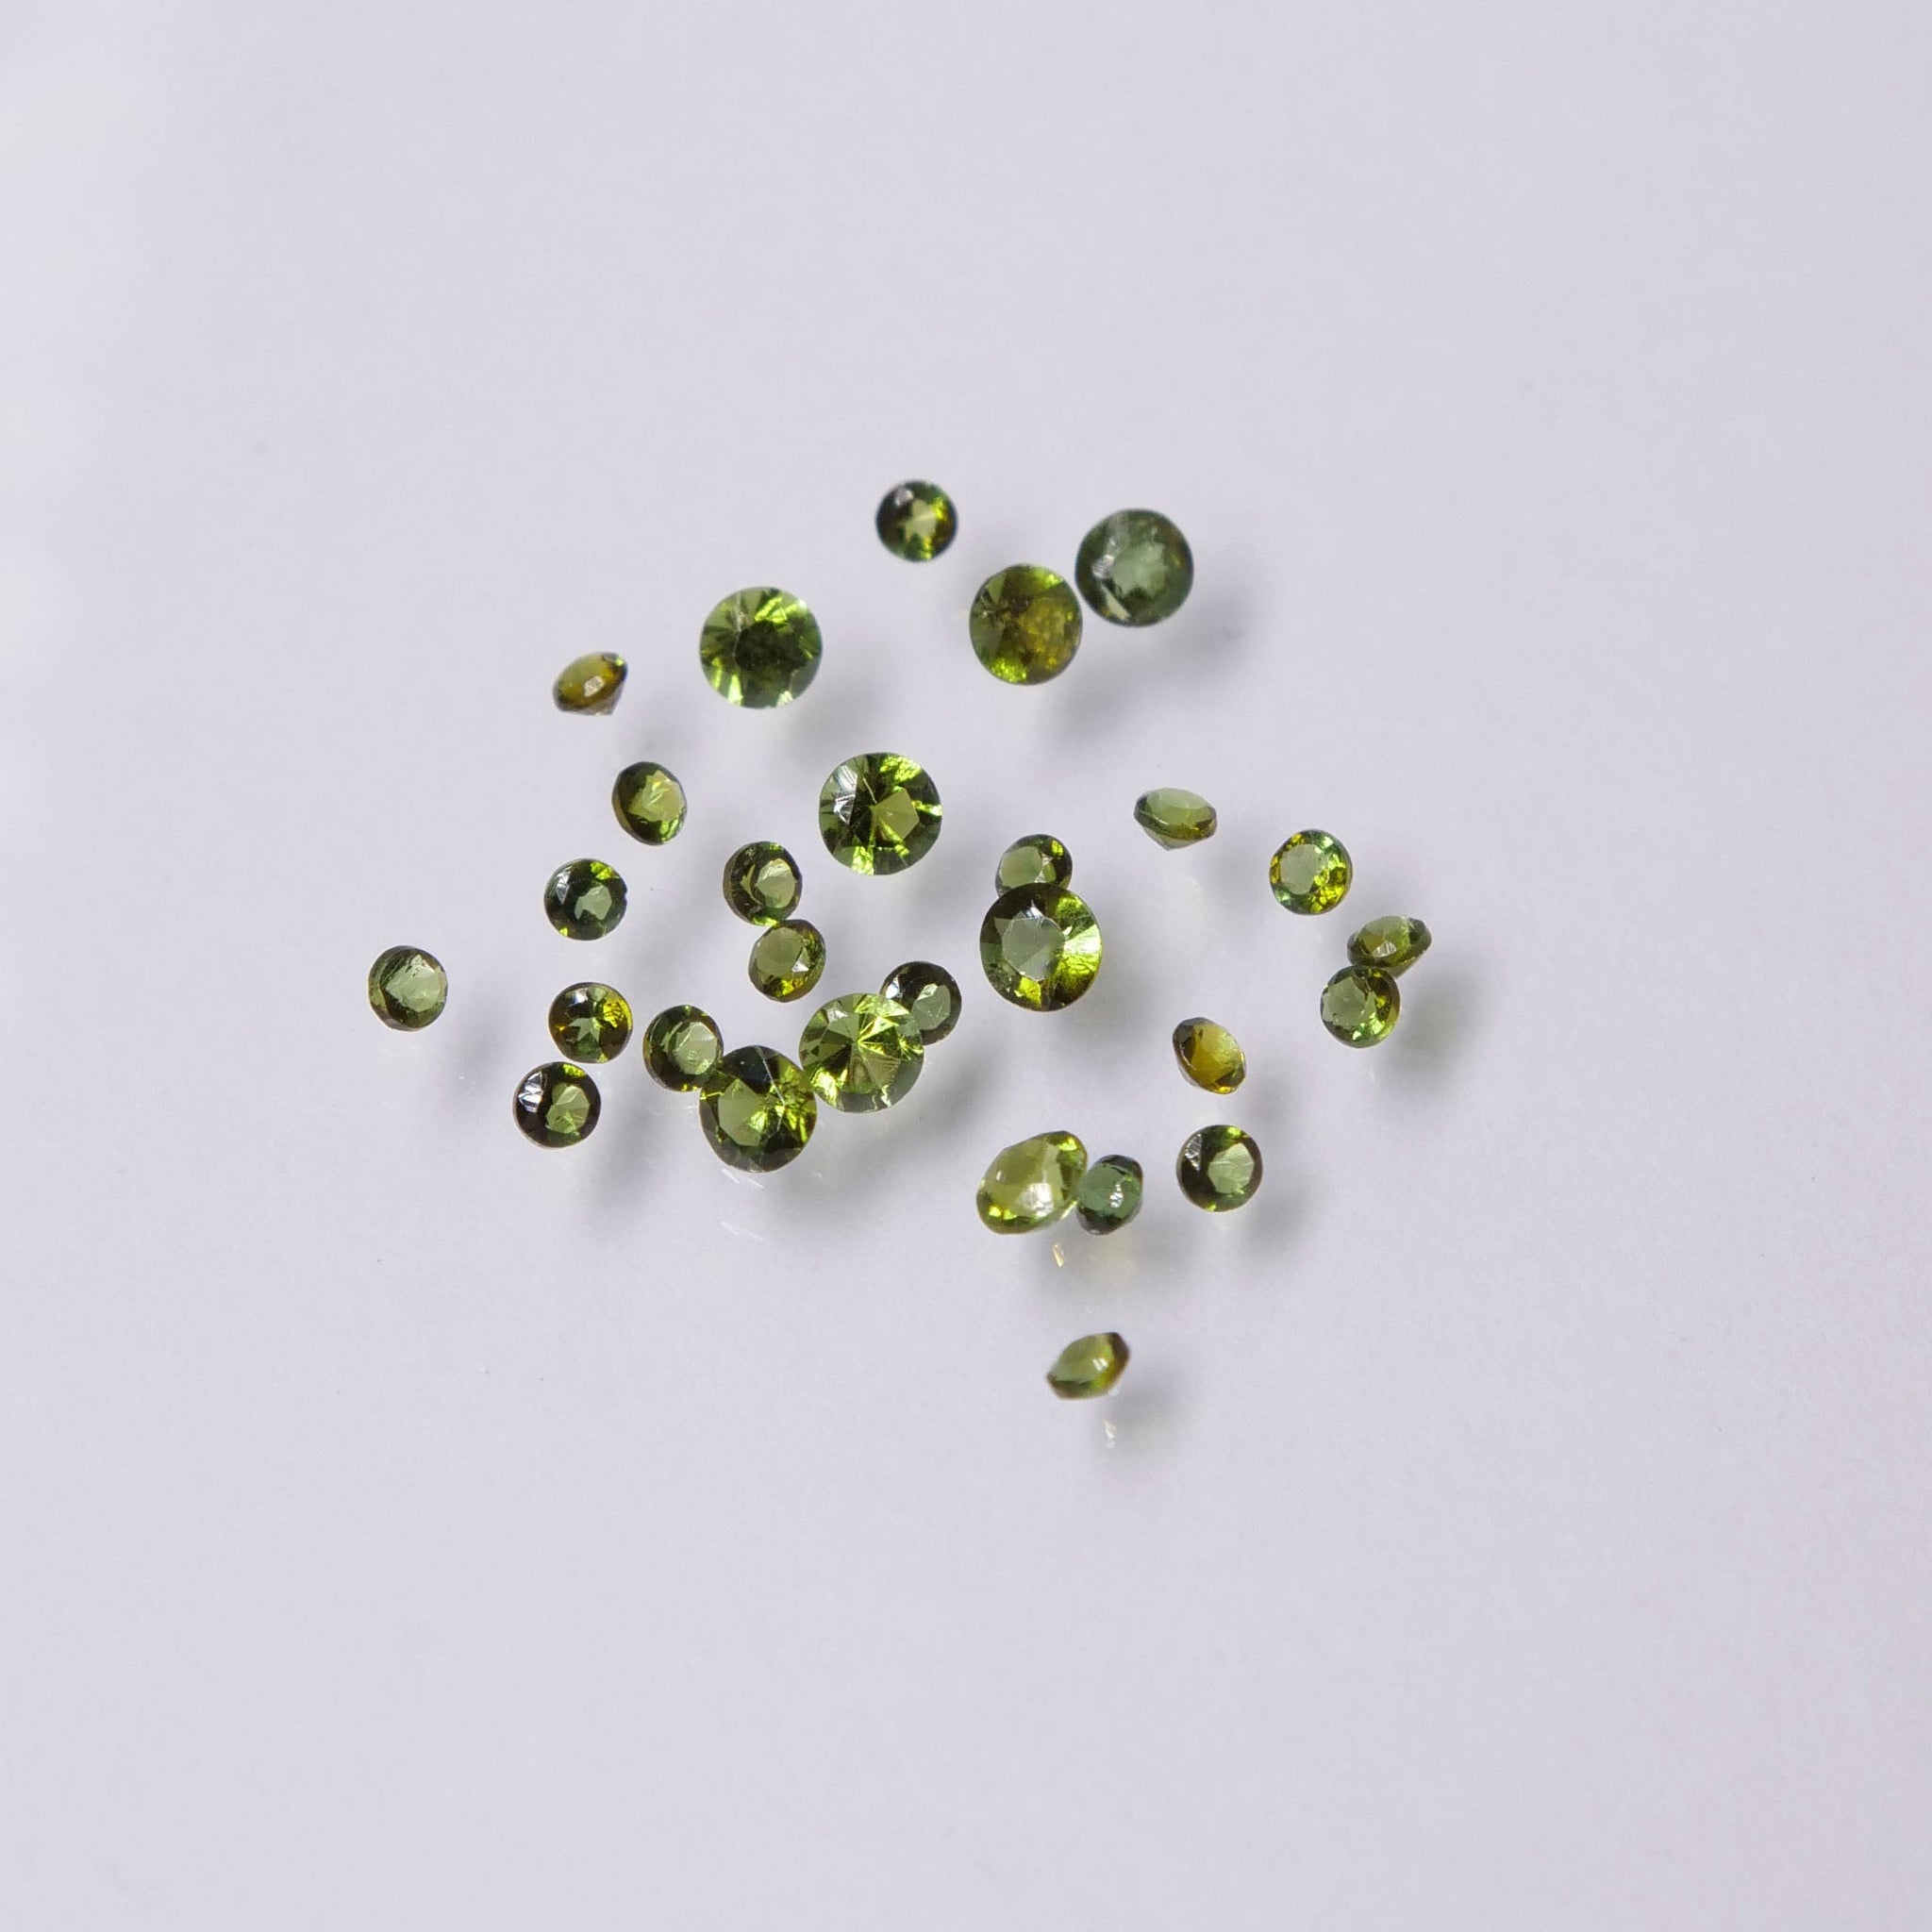 Ivy leaf pattern wedding ring with 3 mm gemstone, comfort fit ring - Eden Garden Jewelry™